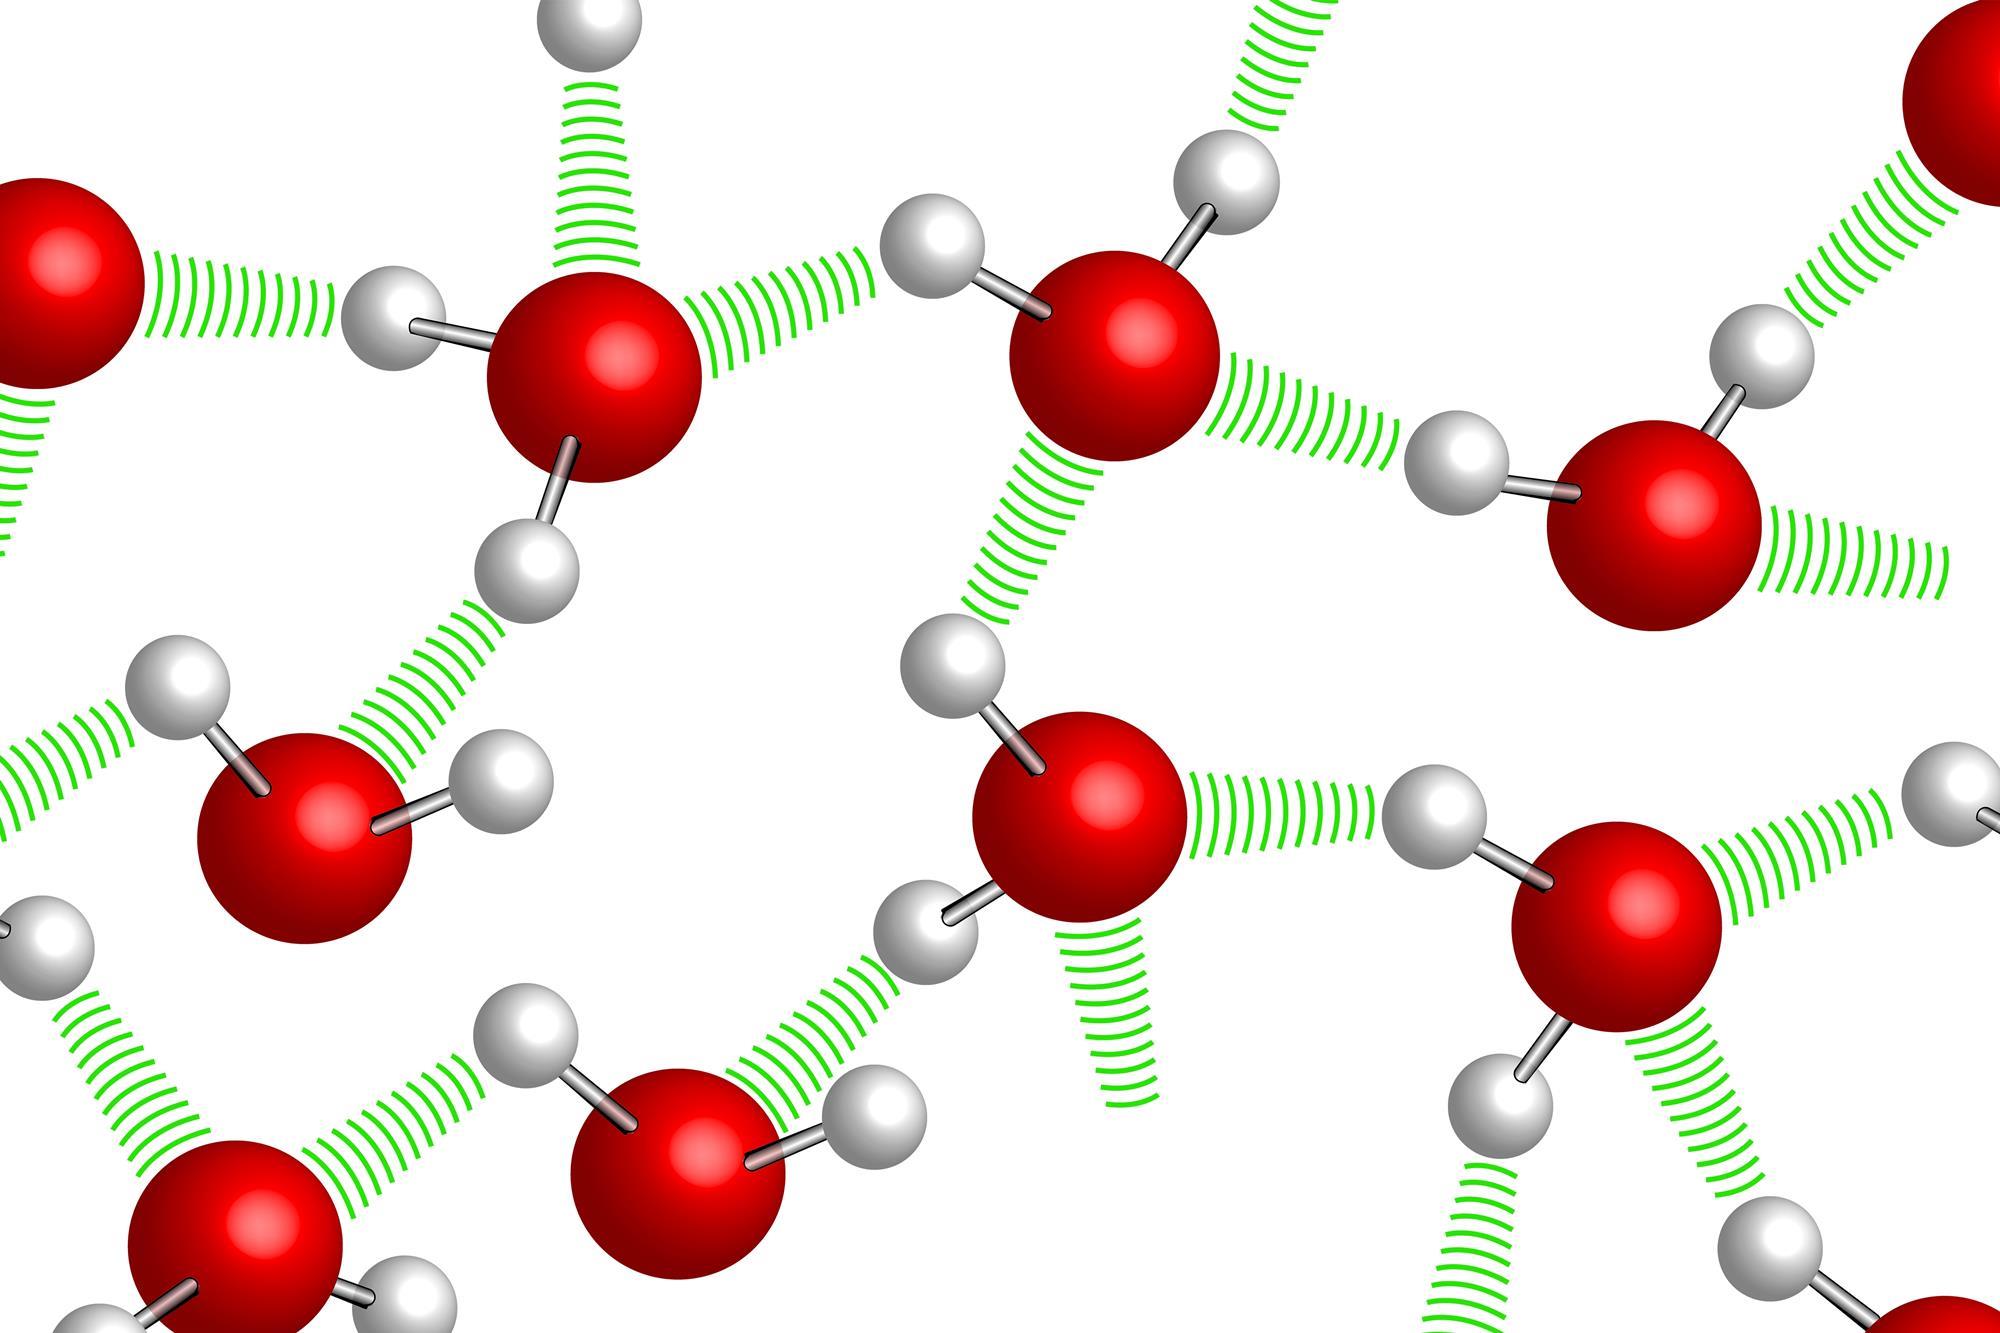 Valence bond theory probes fundamental nature of hydrogen 